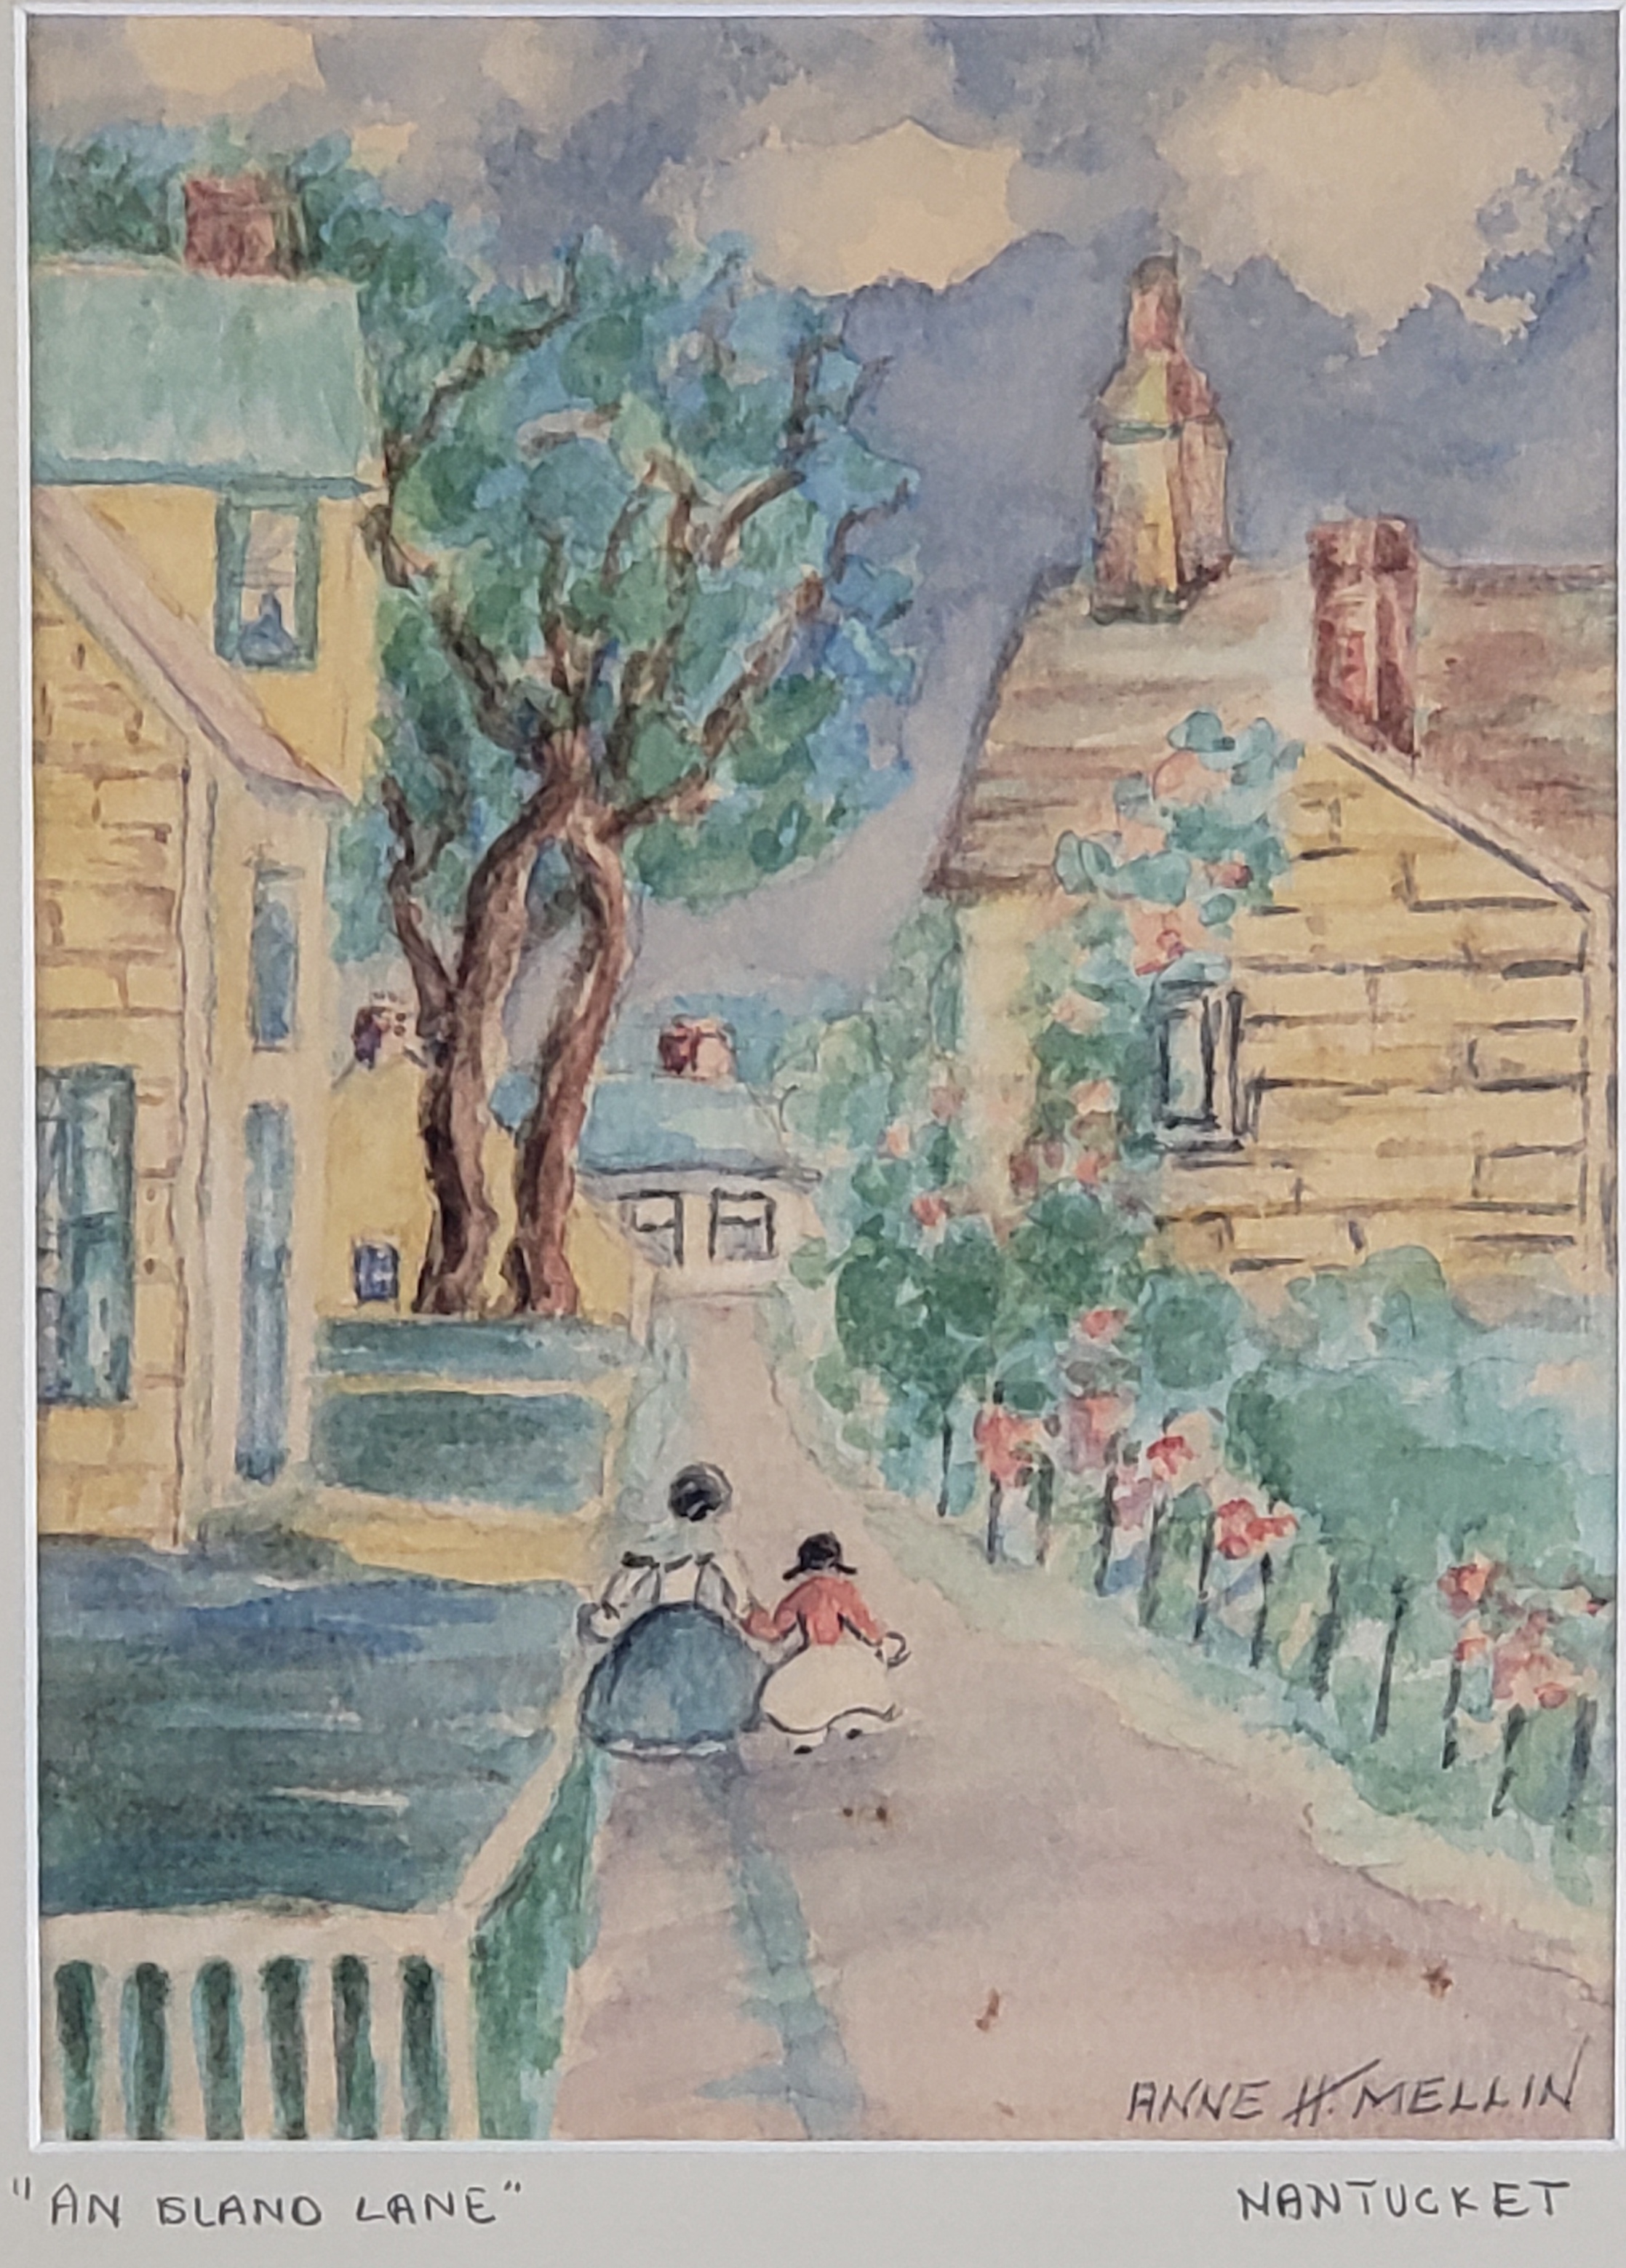 Vintage Anne H. Mellin Nantucket Watercolor on Paper, “An Island Lane”